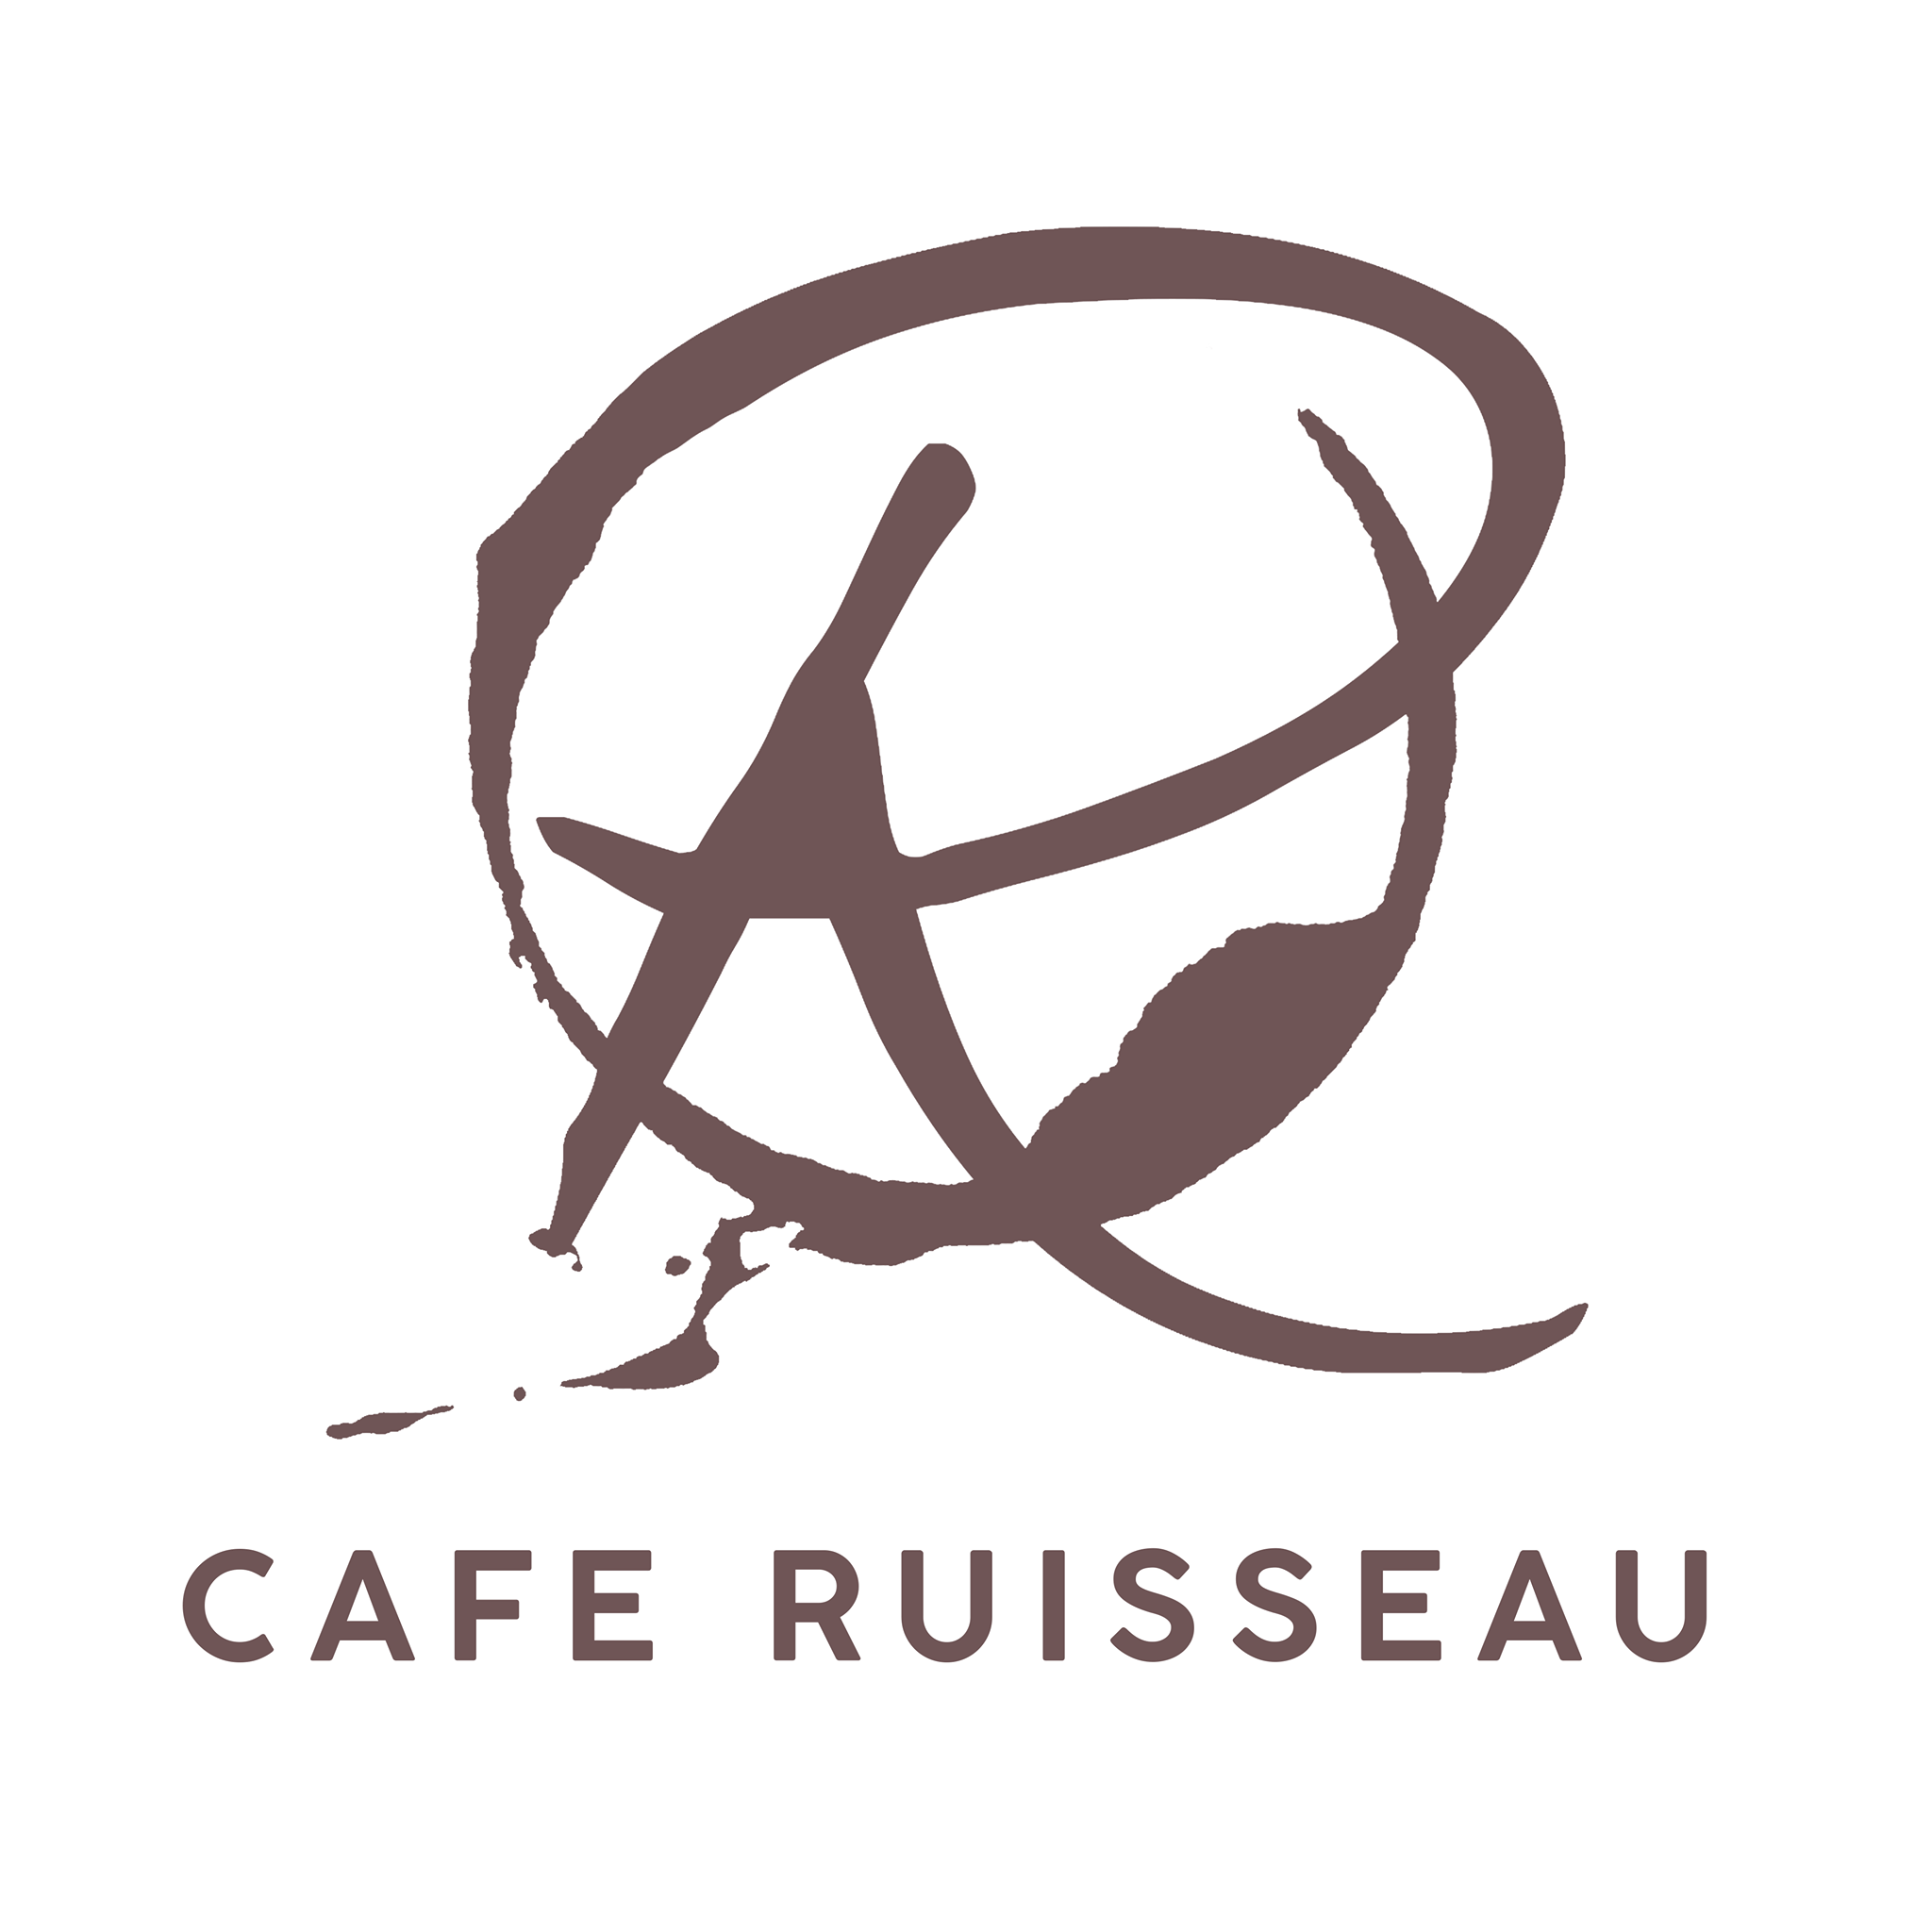 Cafe Ruisseau